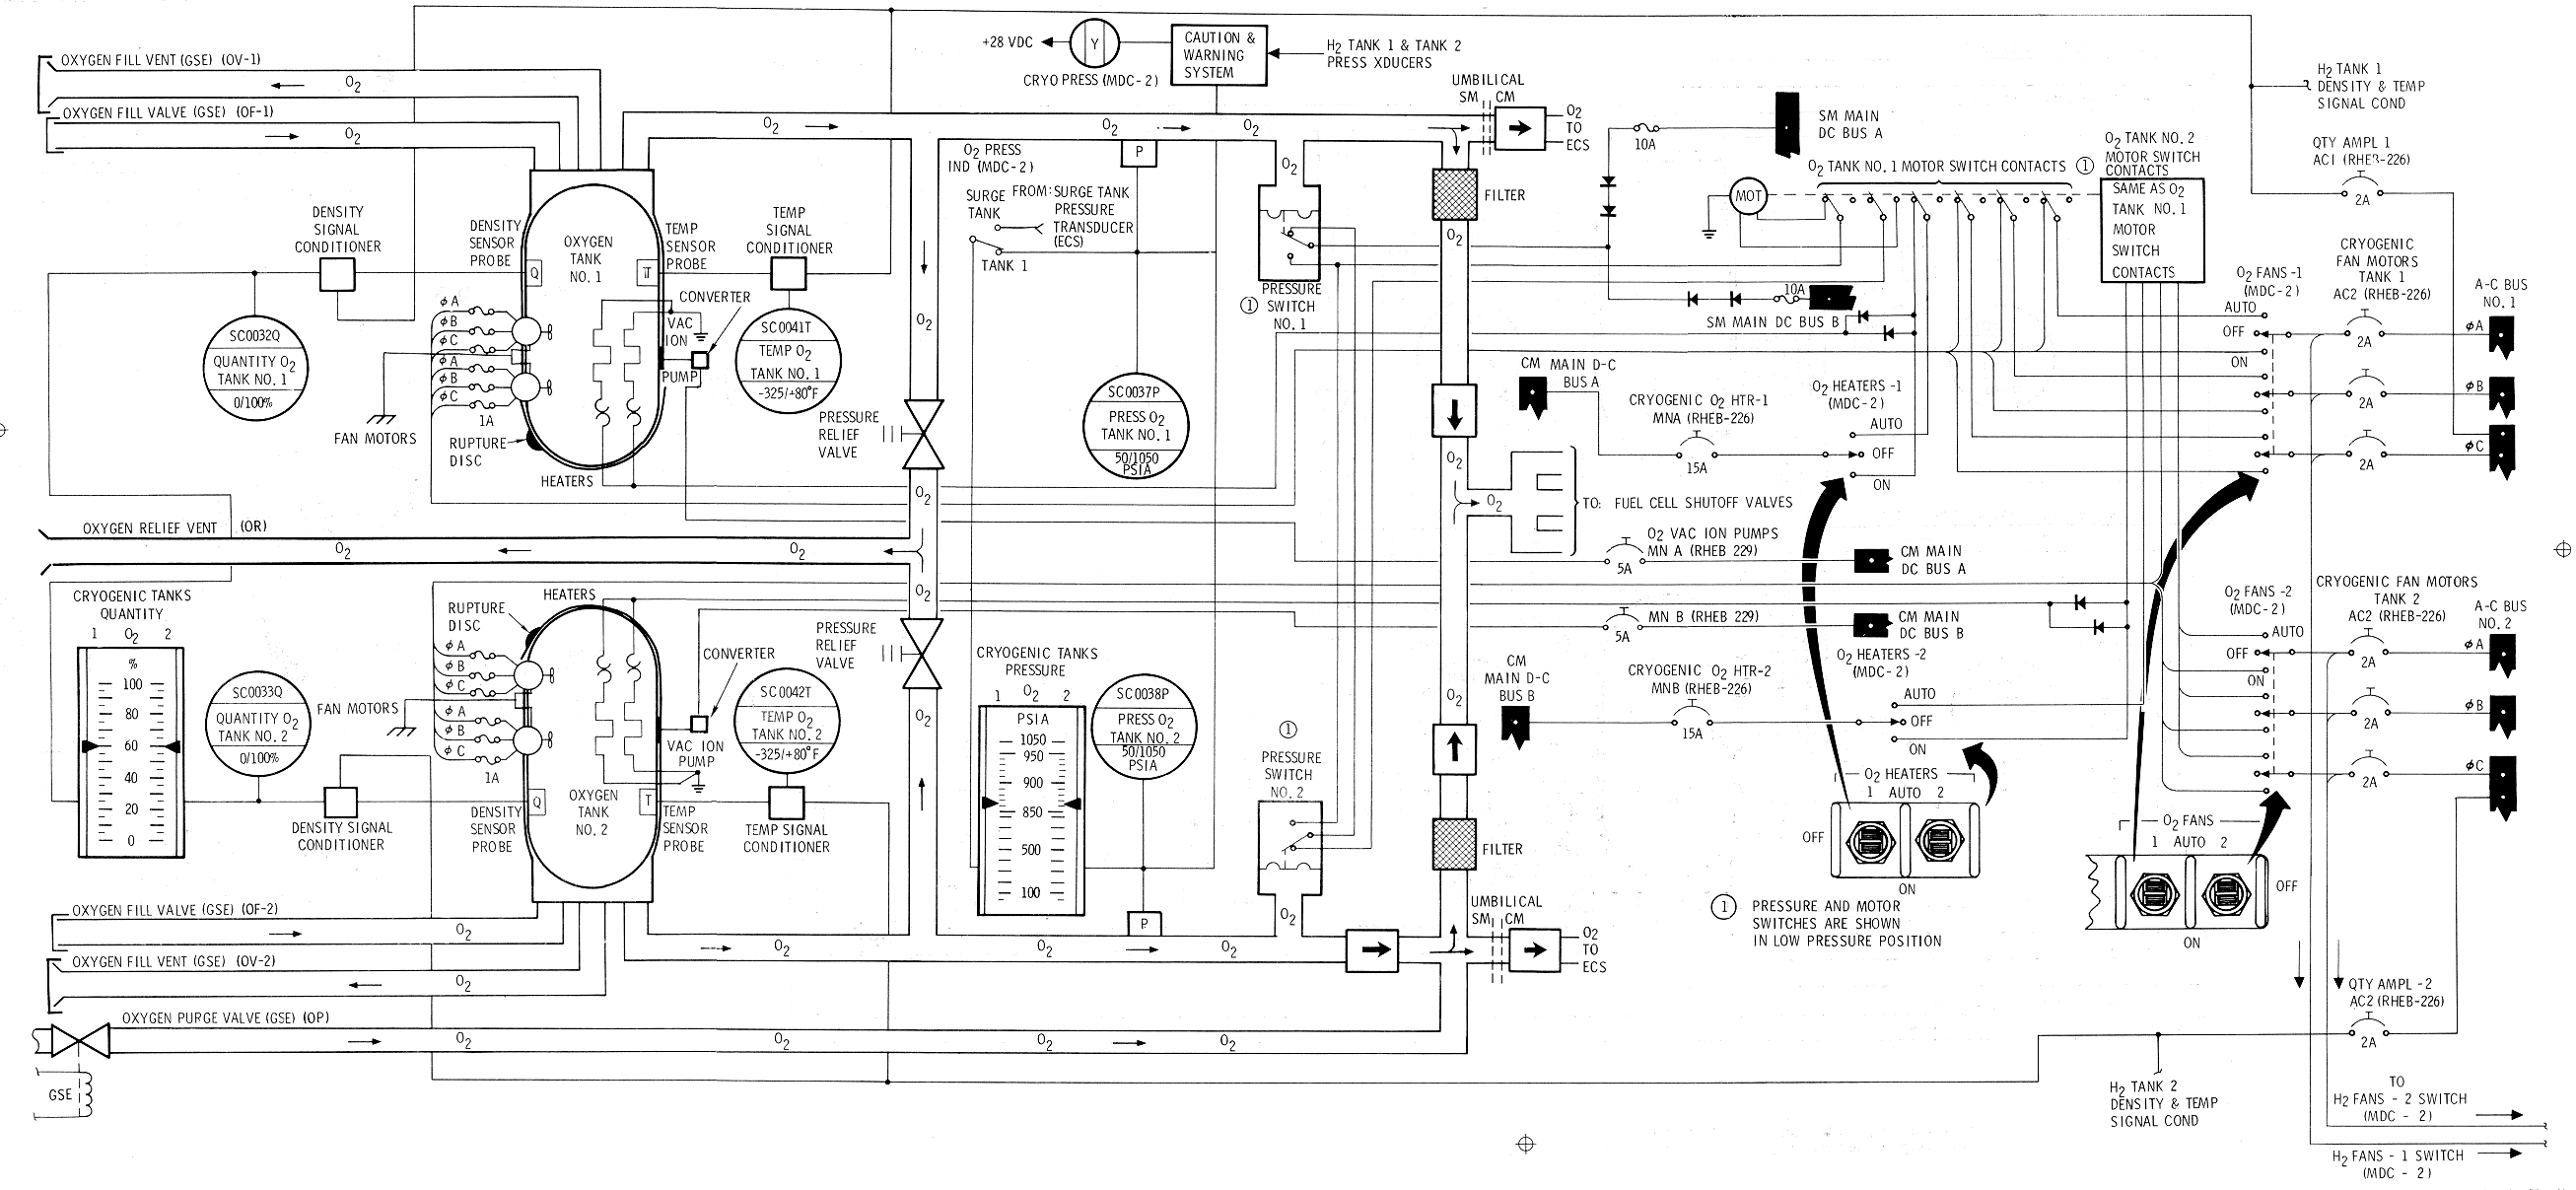 Cryogenic Storage Subsystem (Oxygen) Schematic